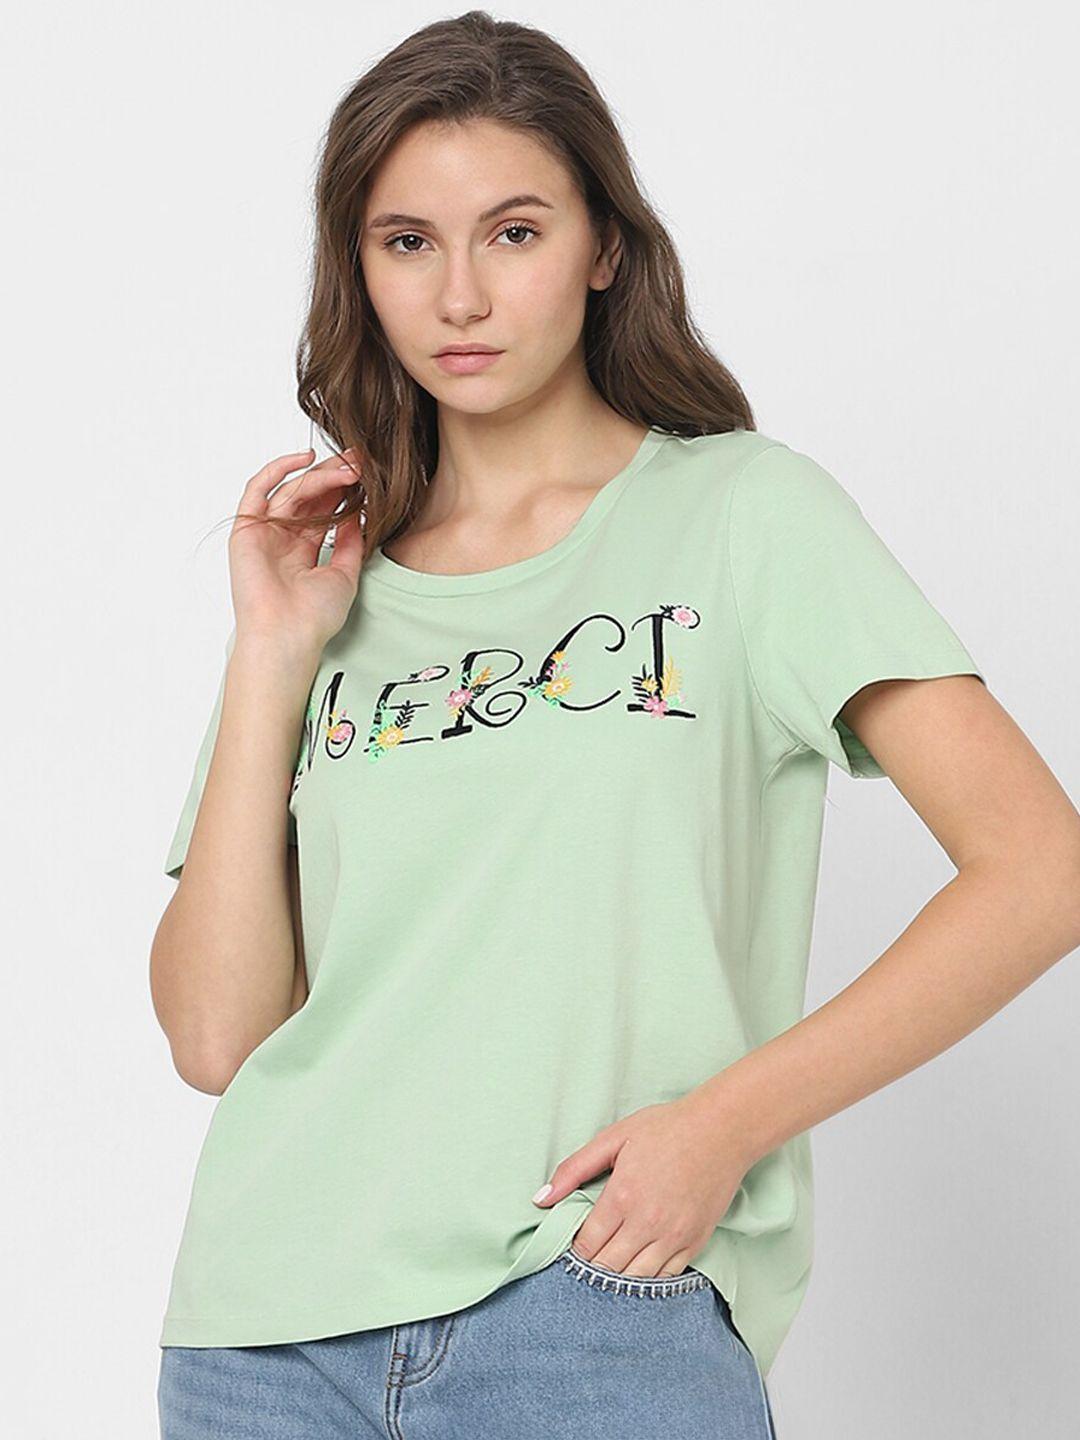 vero-moda-typography-printed-pure-cotton-t-shirt